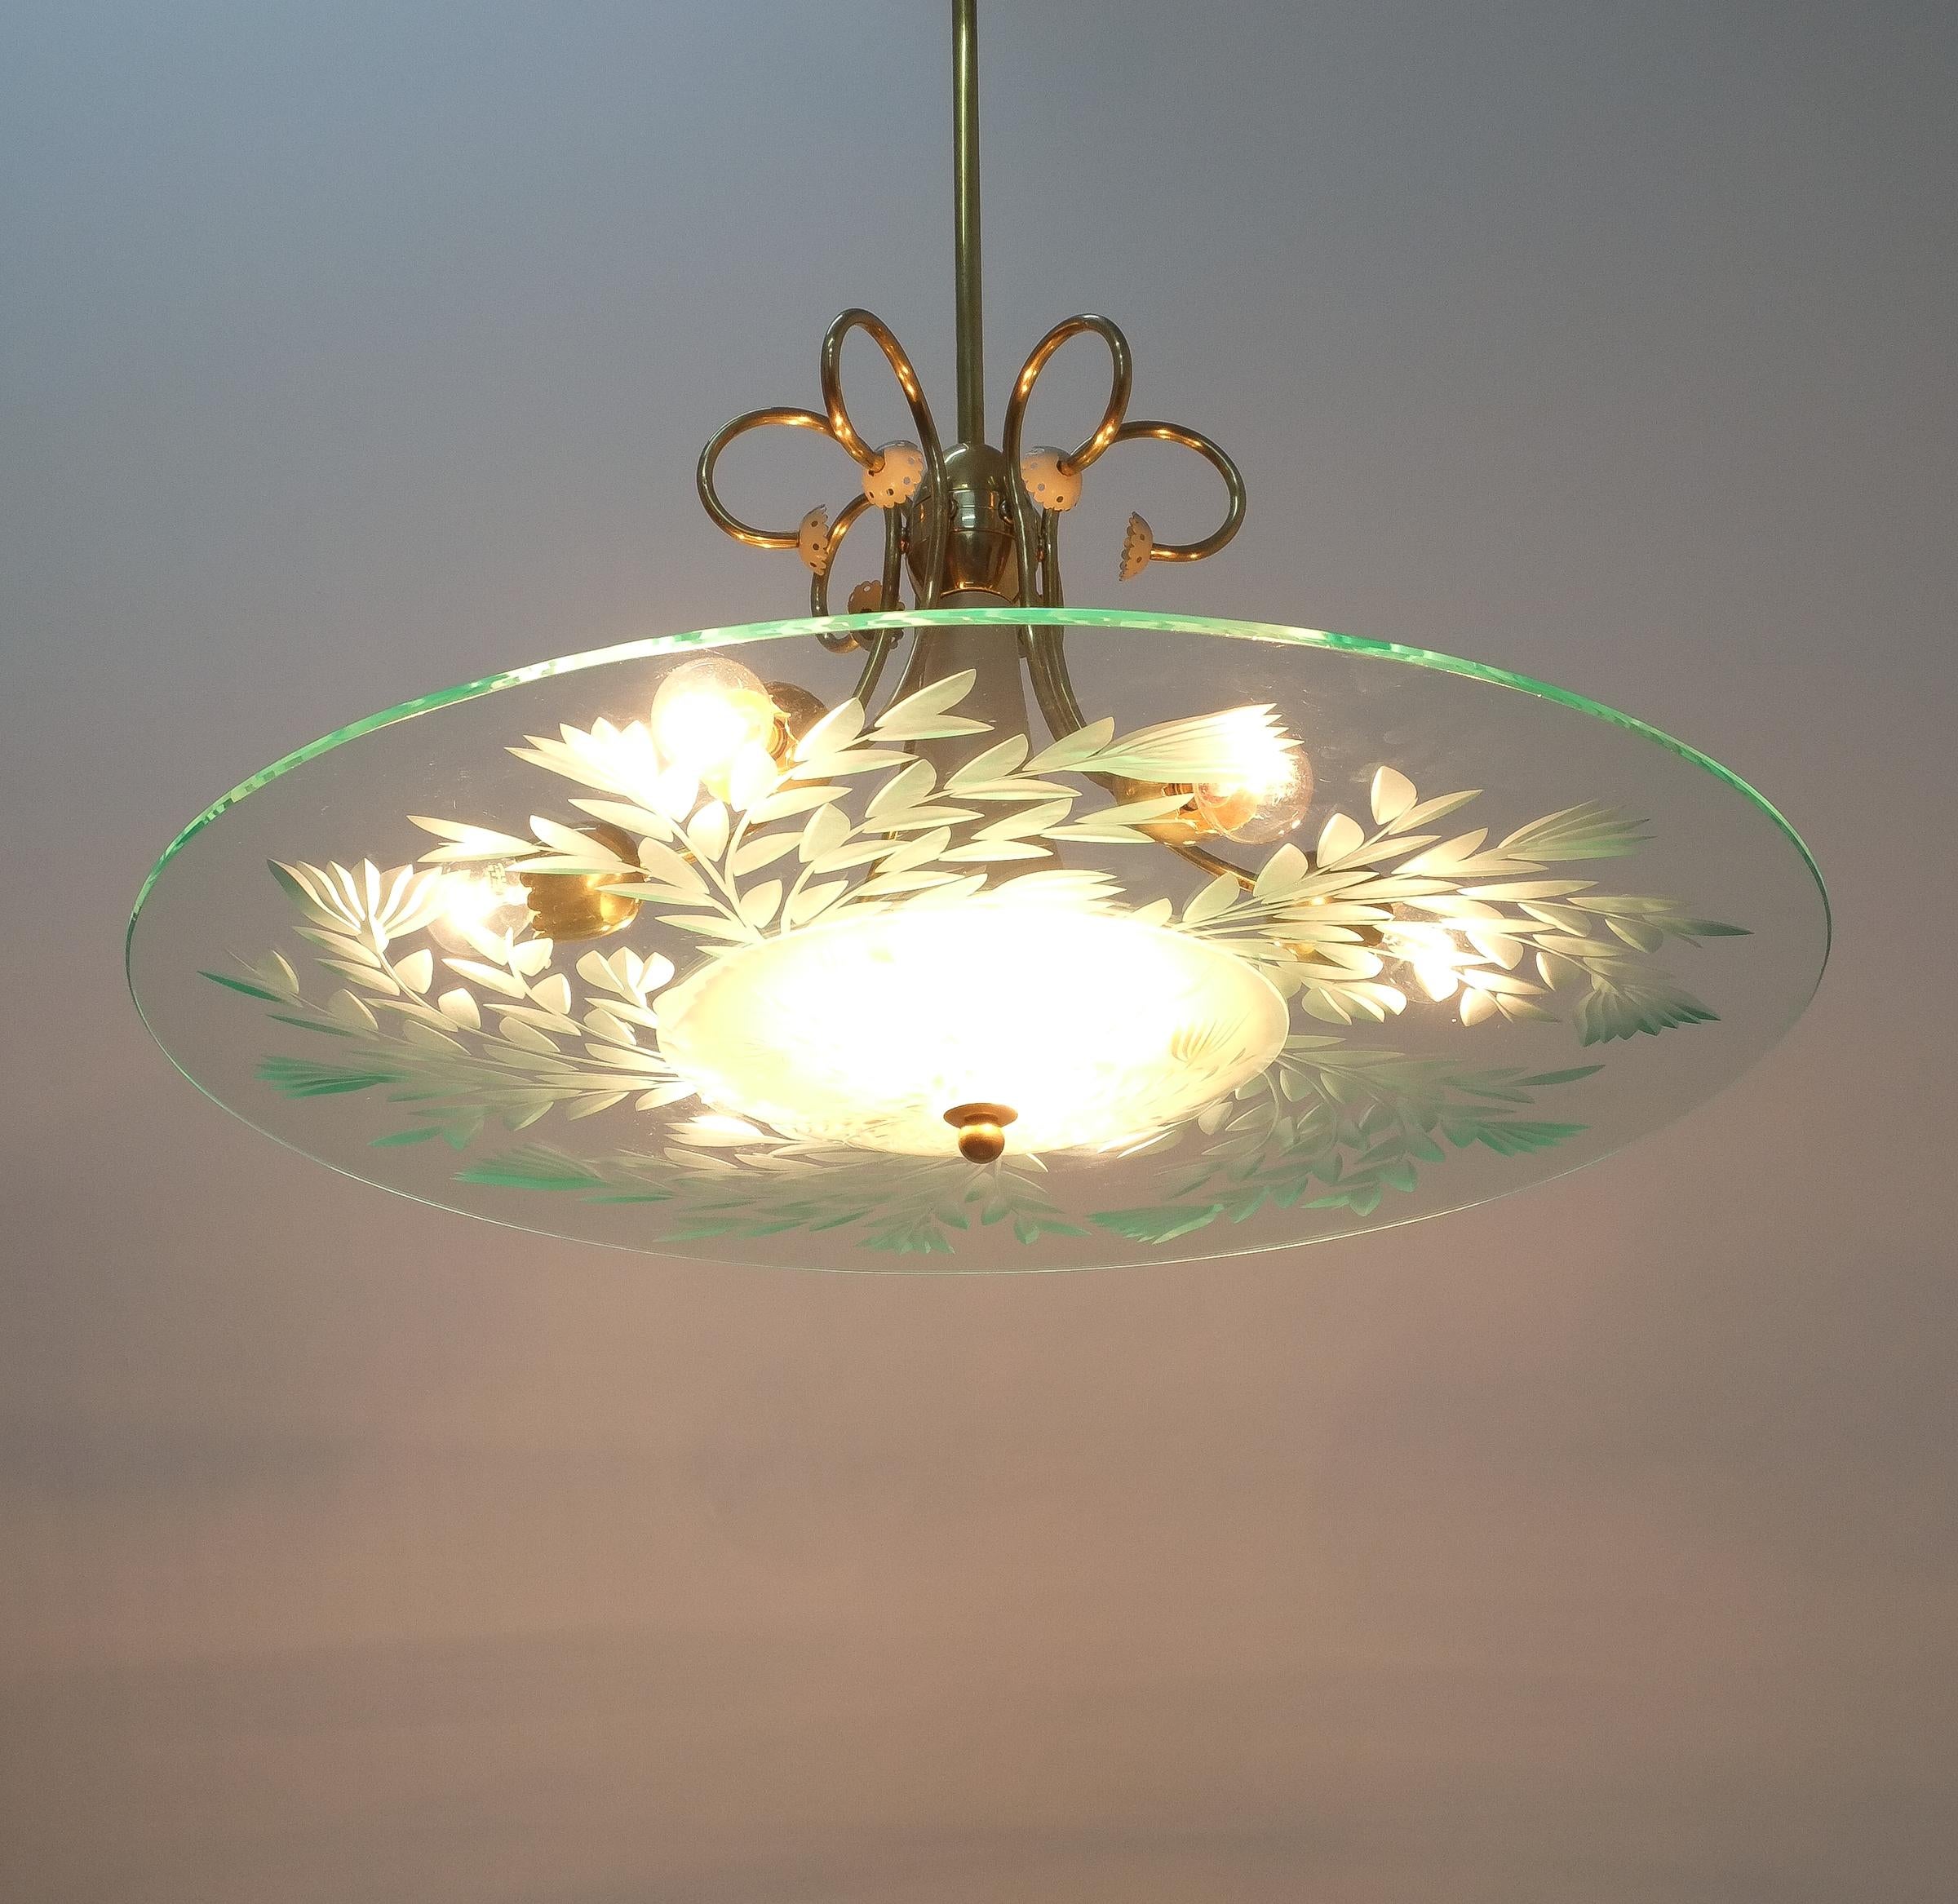 Unique chandelier by Luigi Brusotti, Italy, late Art Deco
Dimensions are 27.55